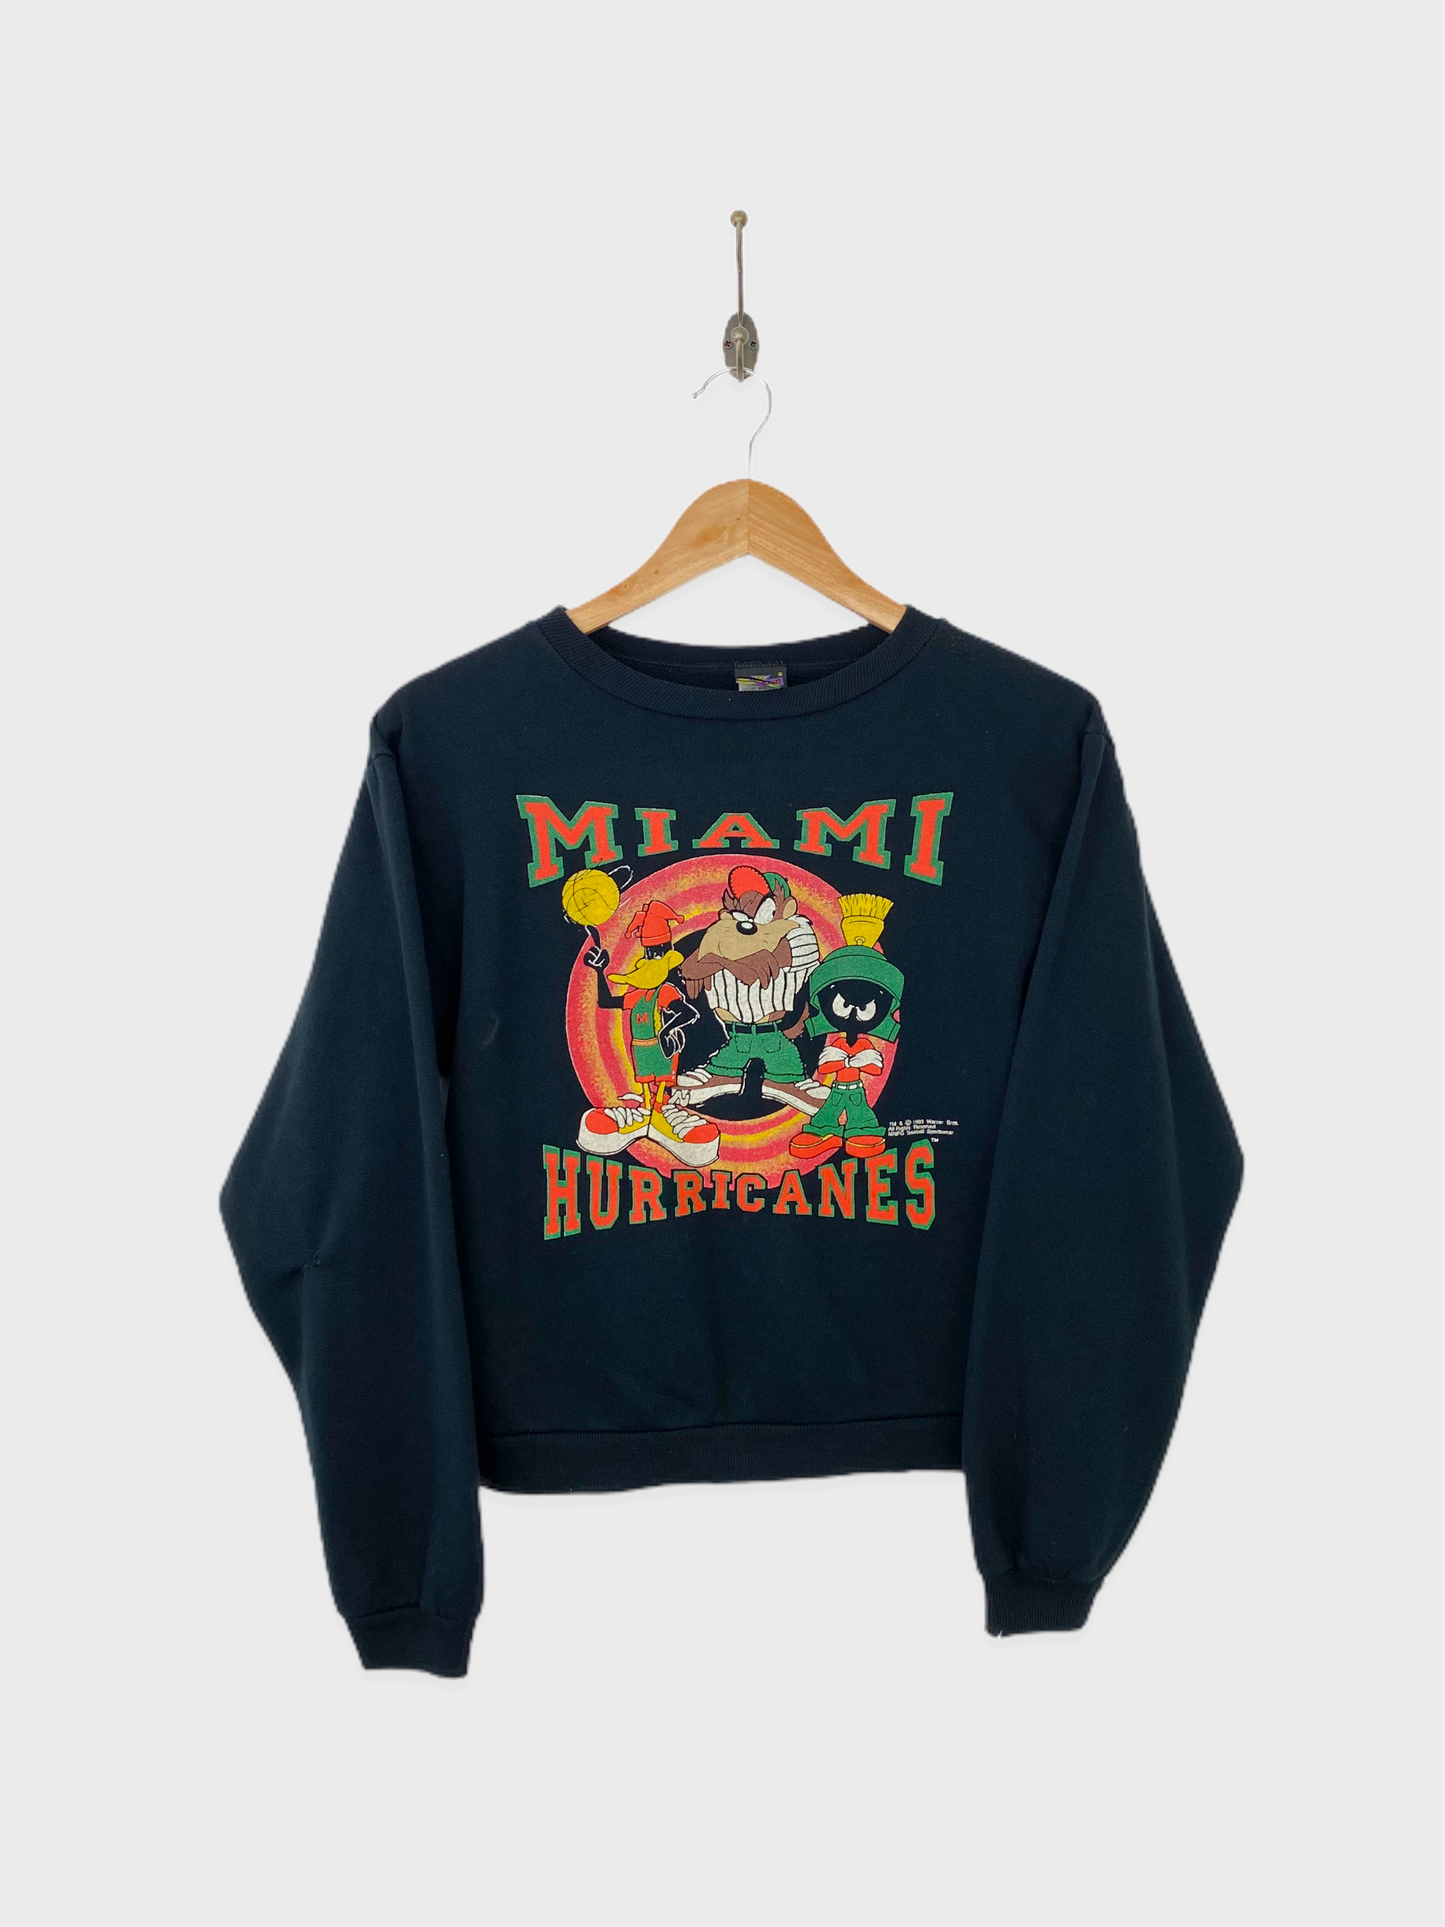 1993 Warner Bro's Miami Hurricanes USA Made Light Vintage Sweatshirt Size 6